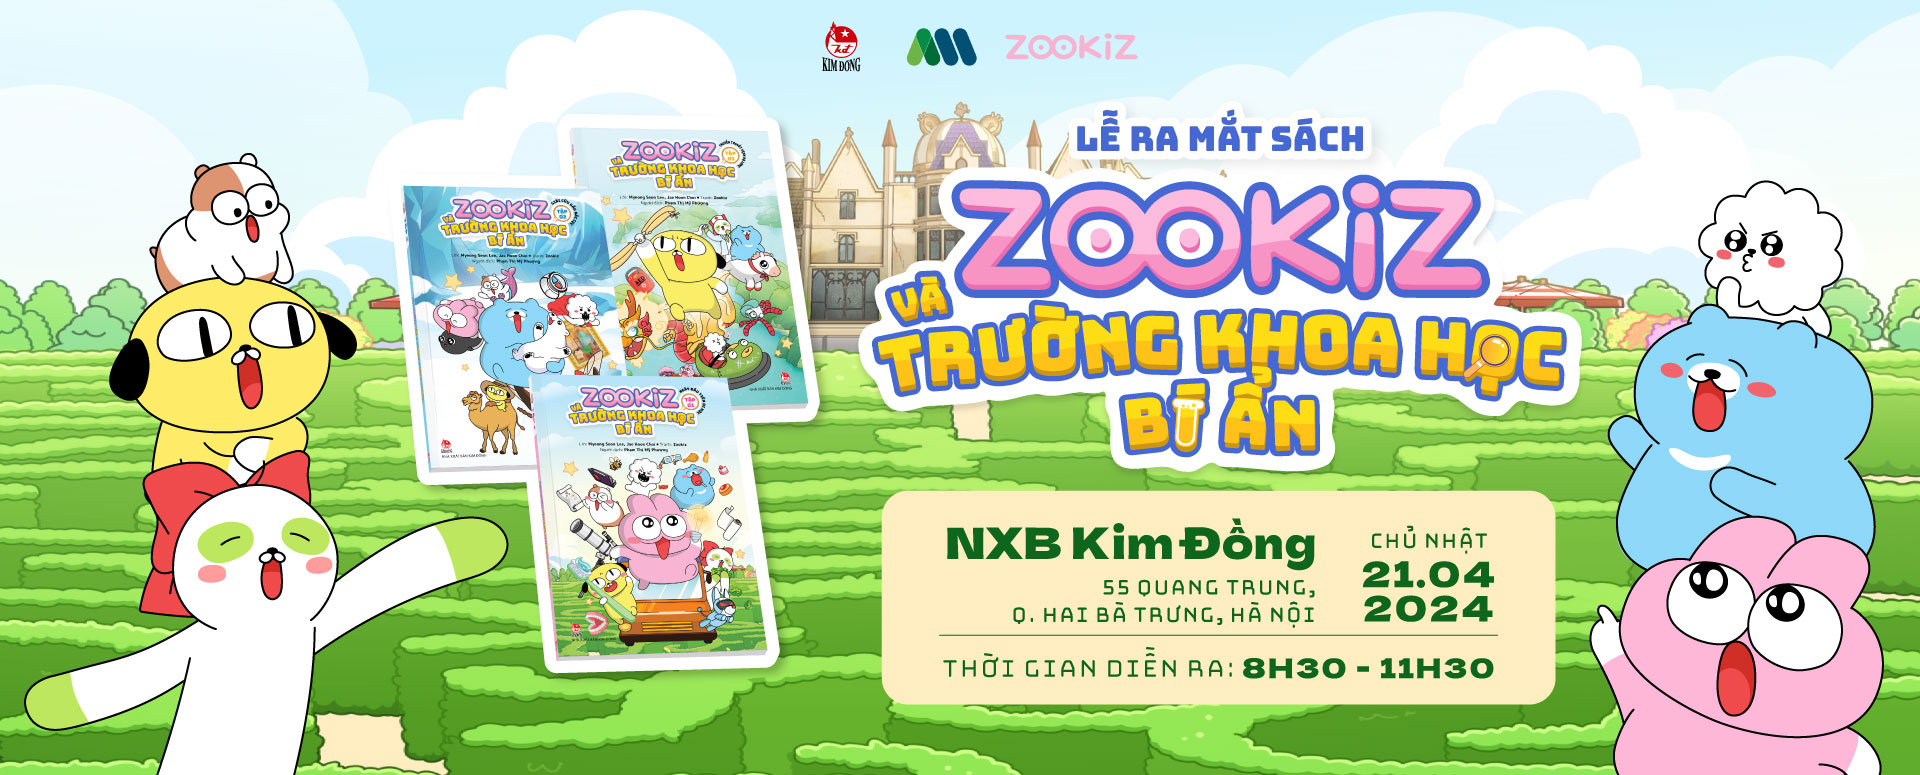 Sự kiện ra mắt sách Zookiz